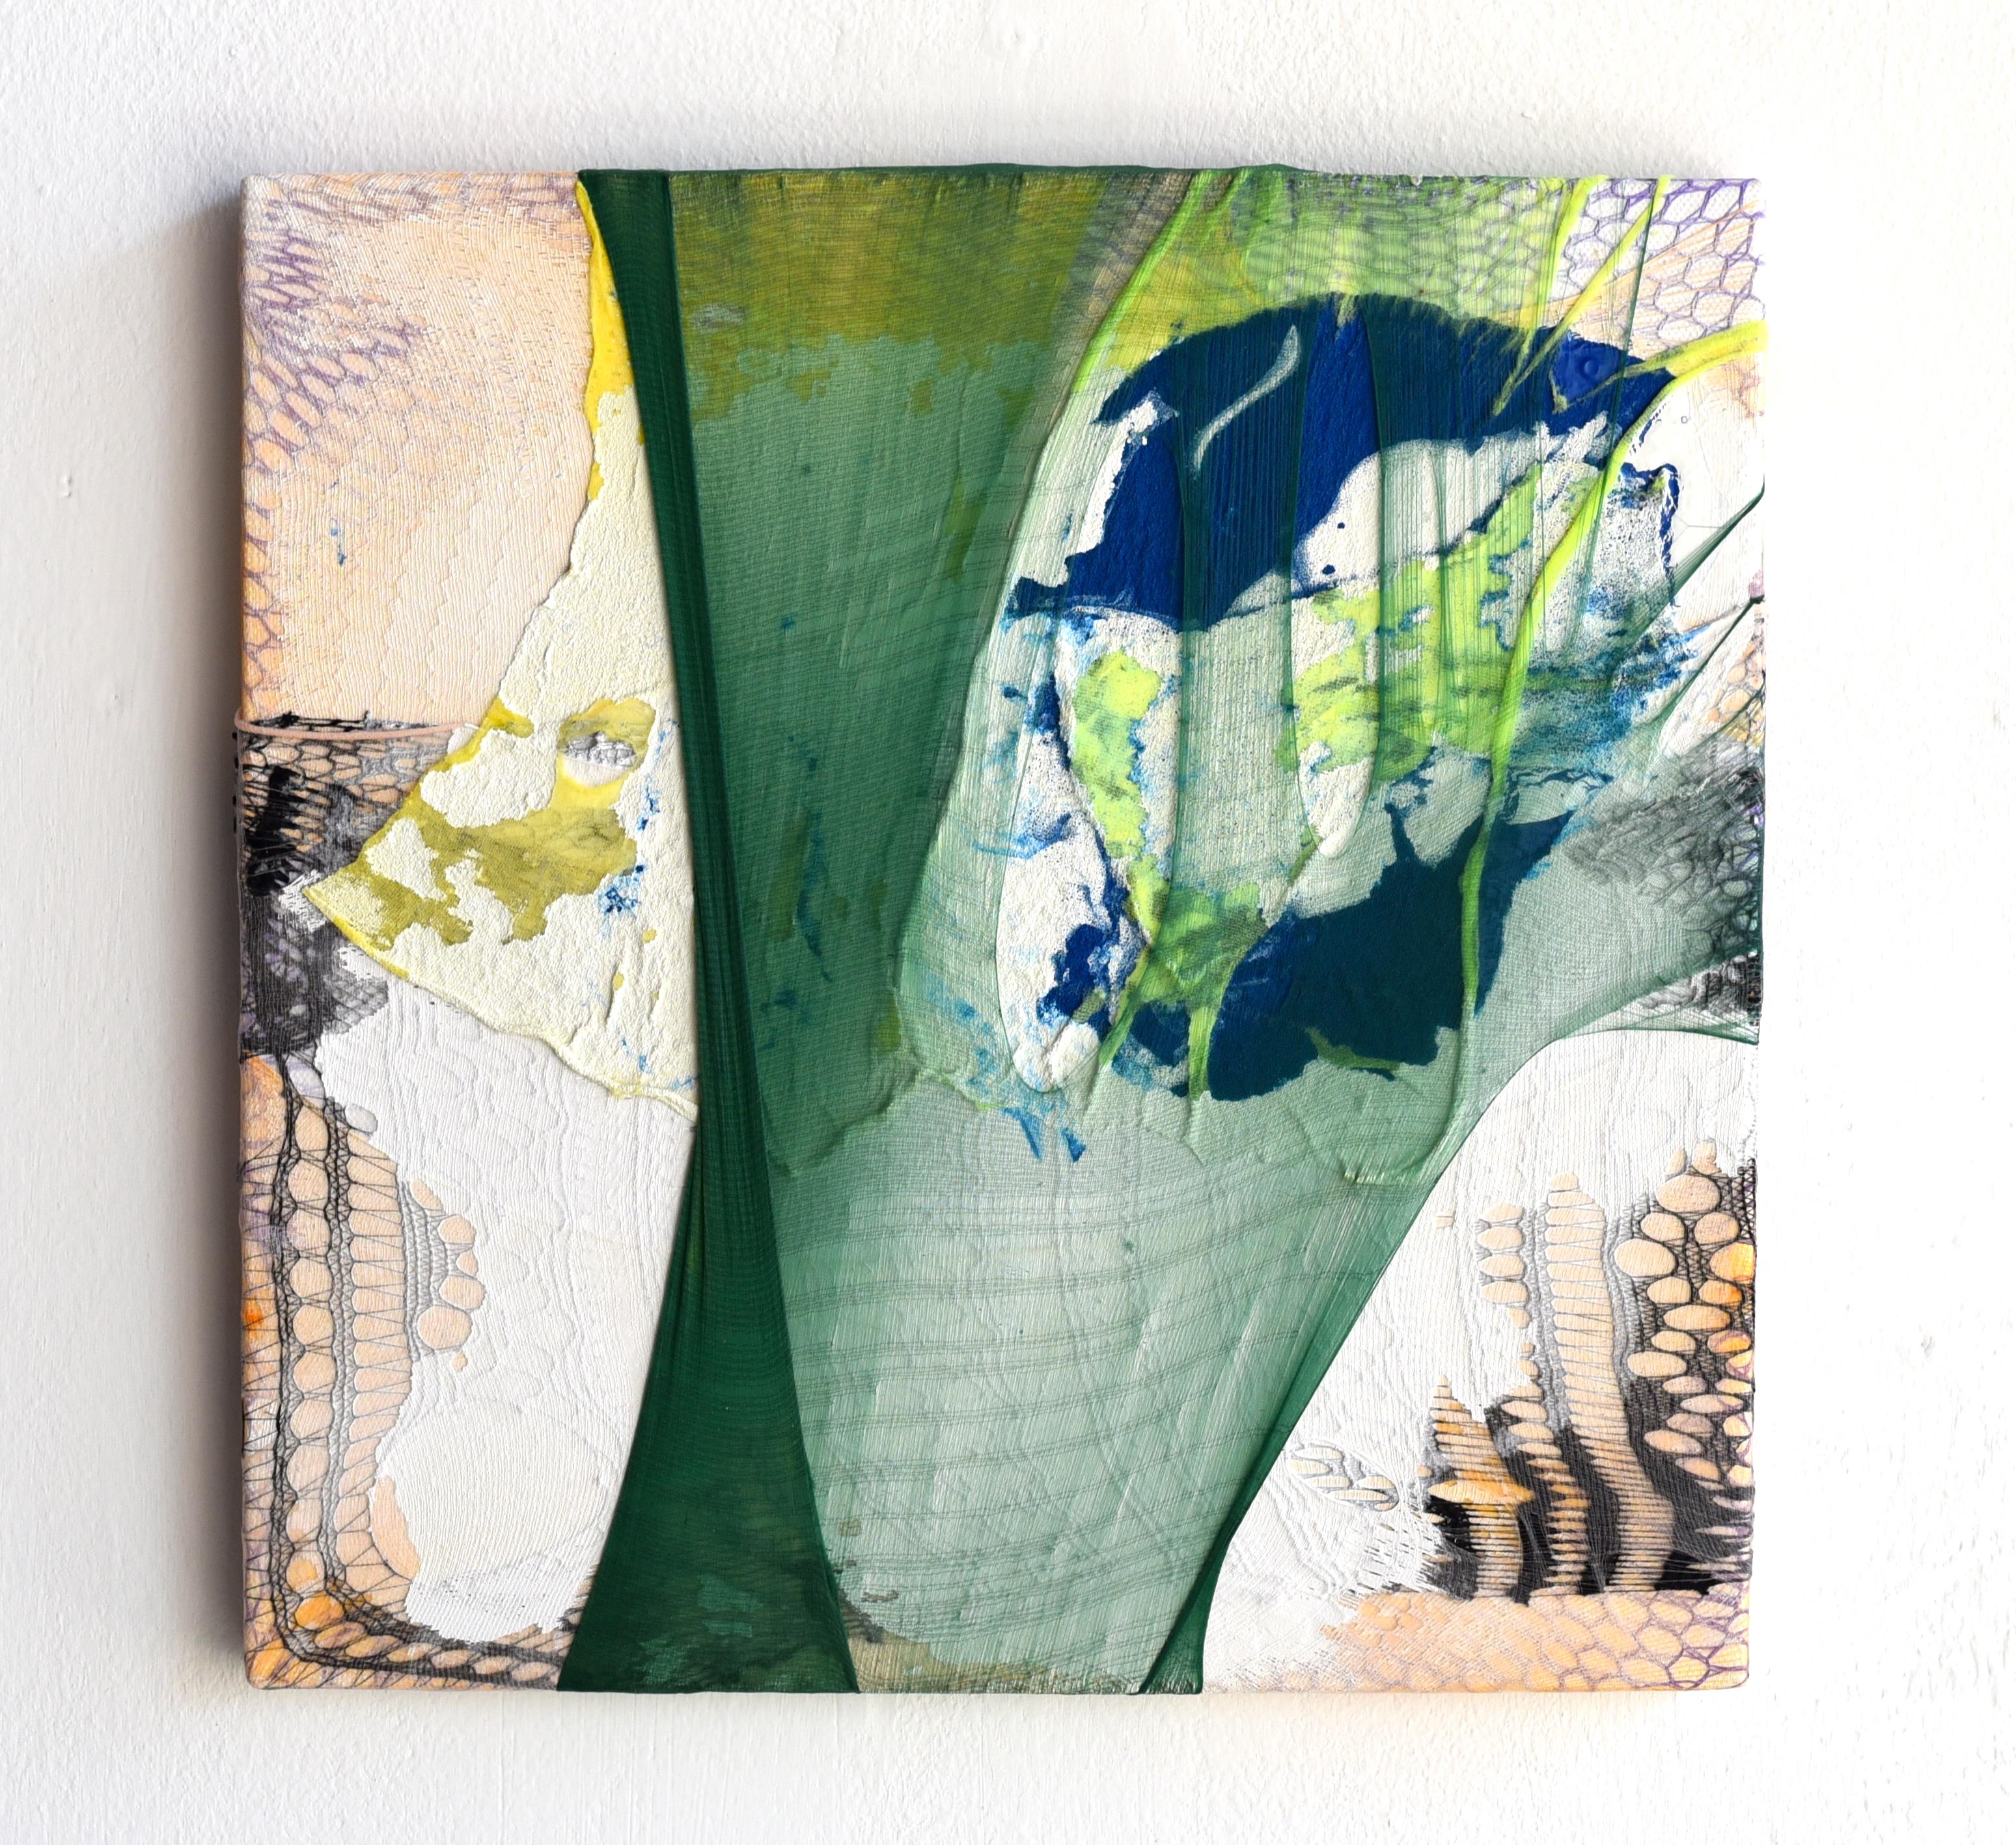 Nylon Painting 14 (textile art, green, abstract painting, textured wall art) - Mixed Media Art by Anna-Lena Sauer